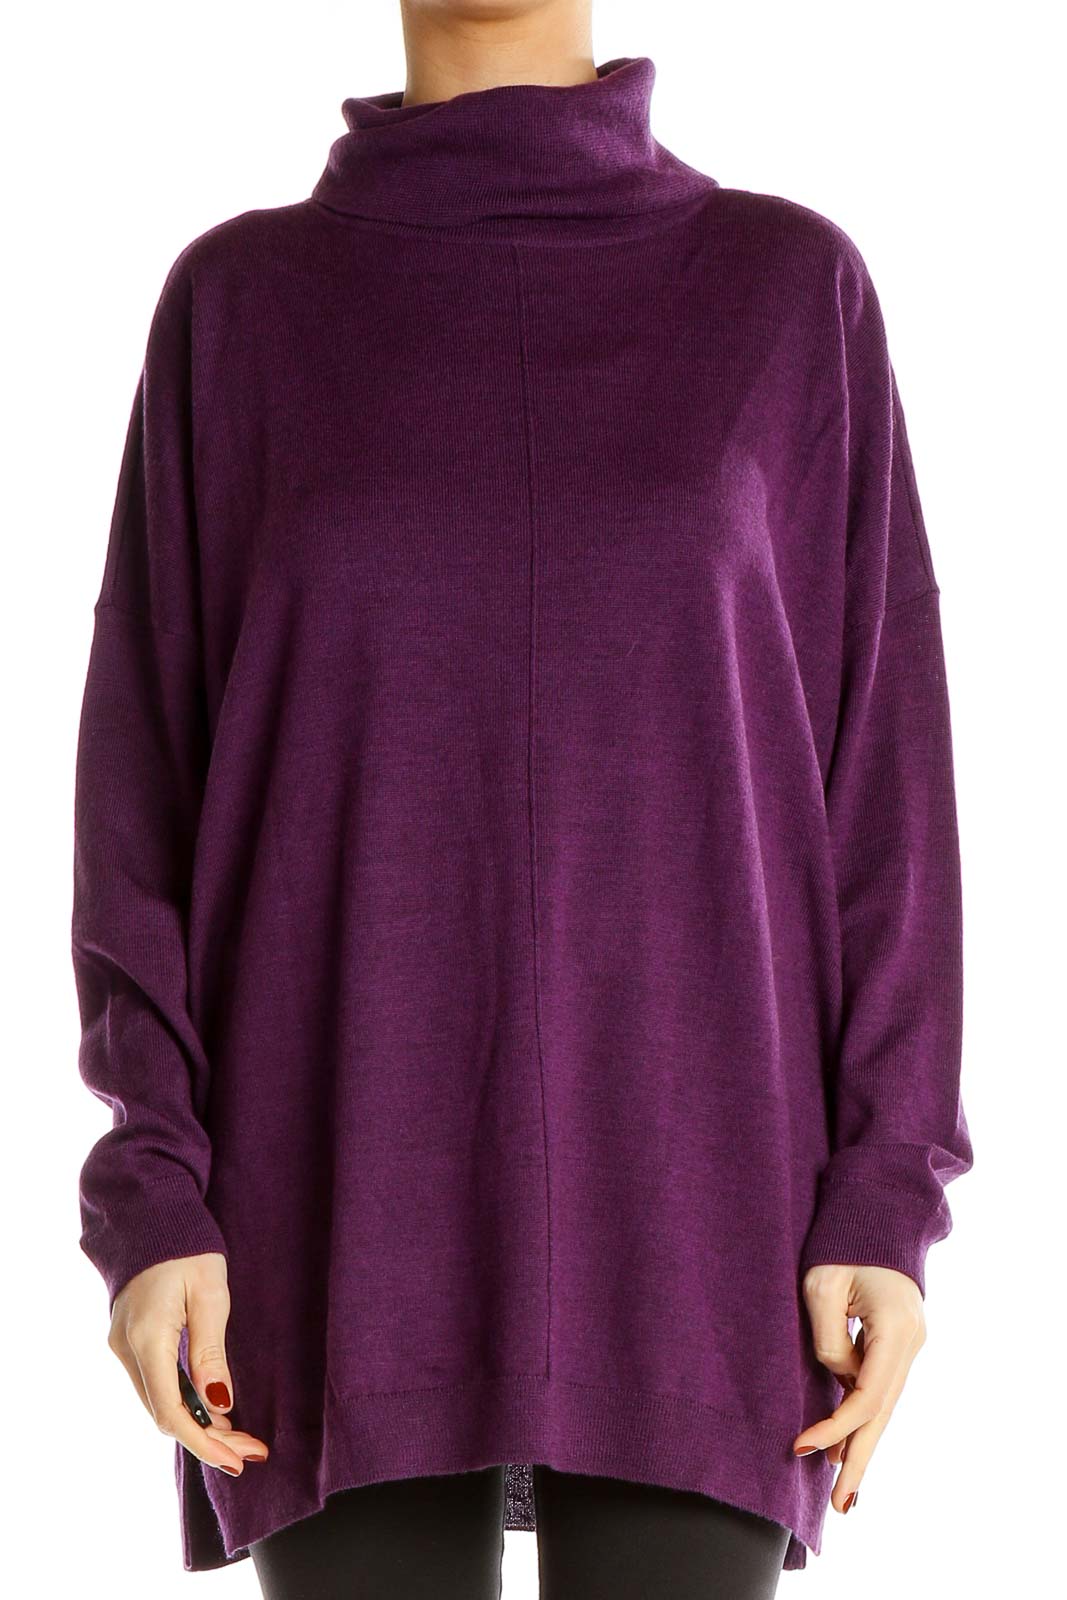 Purple All Day Wear Sweater Front